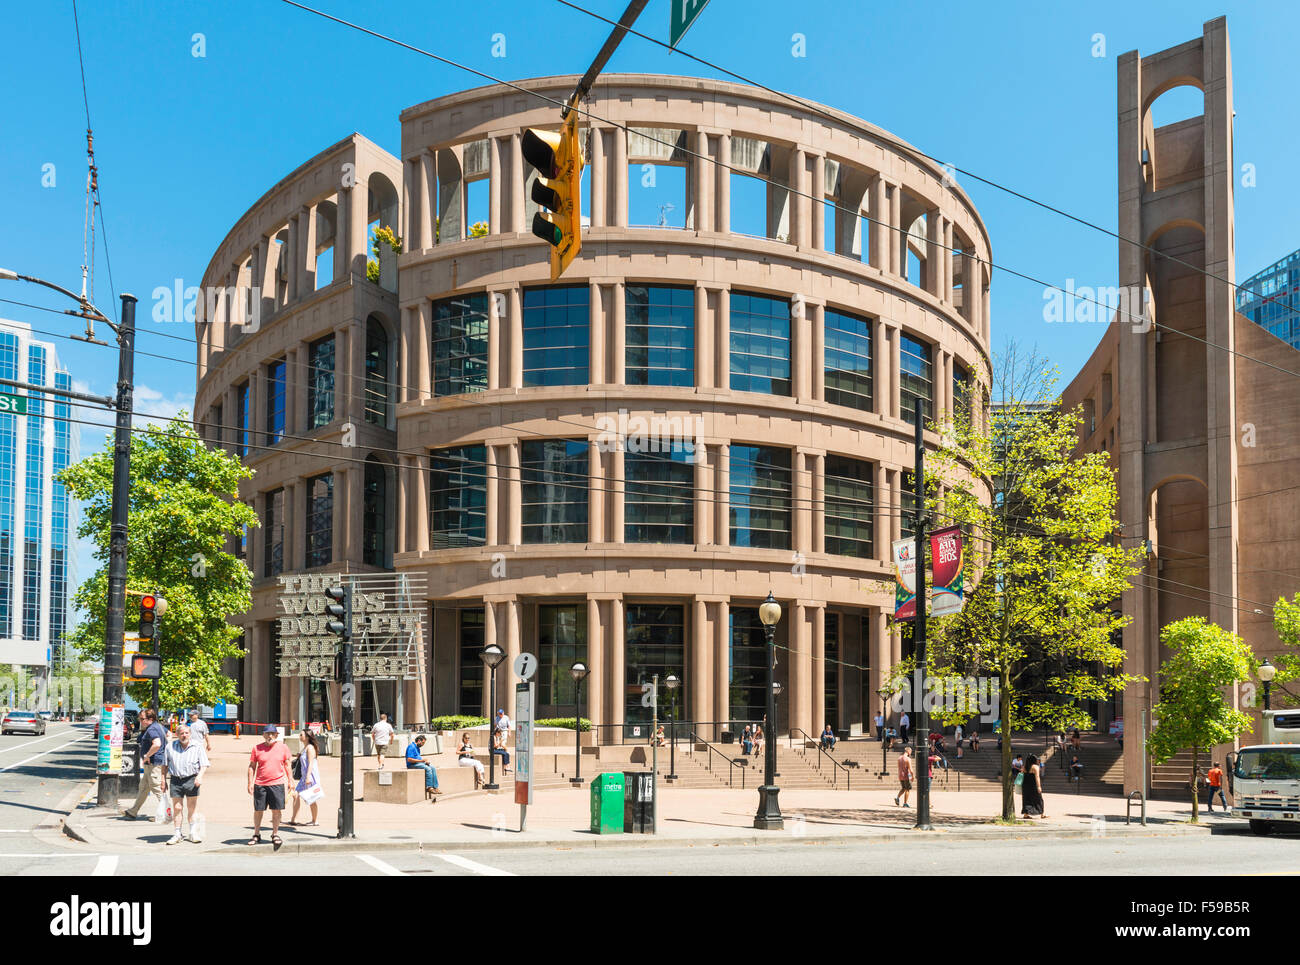 Vancouver Public Library (1995), entworfen von Moshe Safdie und DA Architekten, Library Square, Vancouver, BC, Kanada. Stockfoto